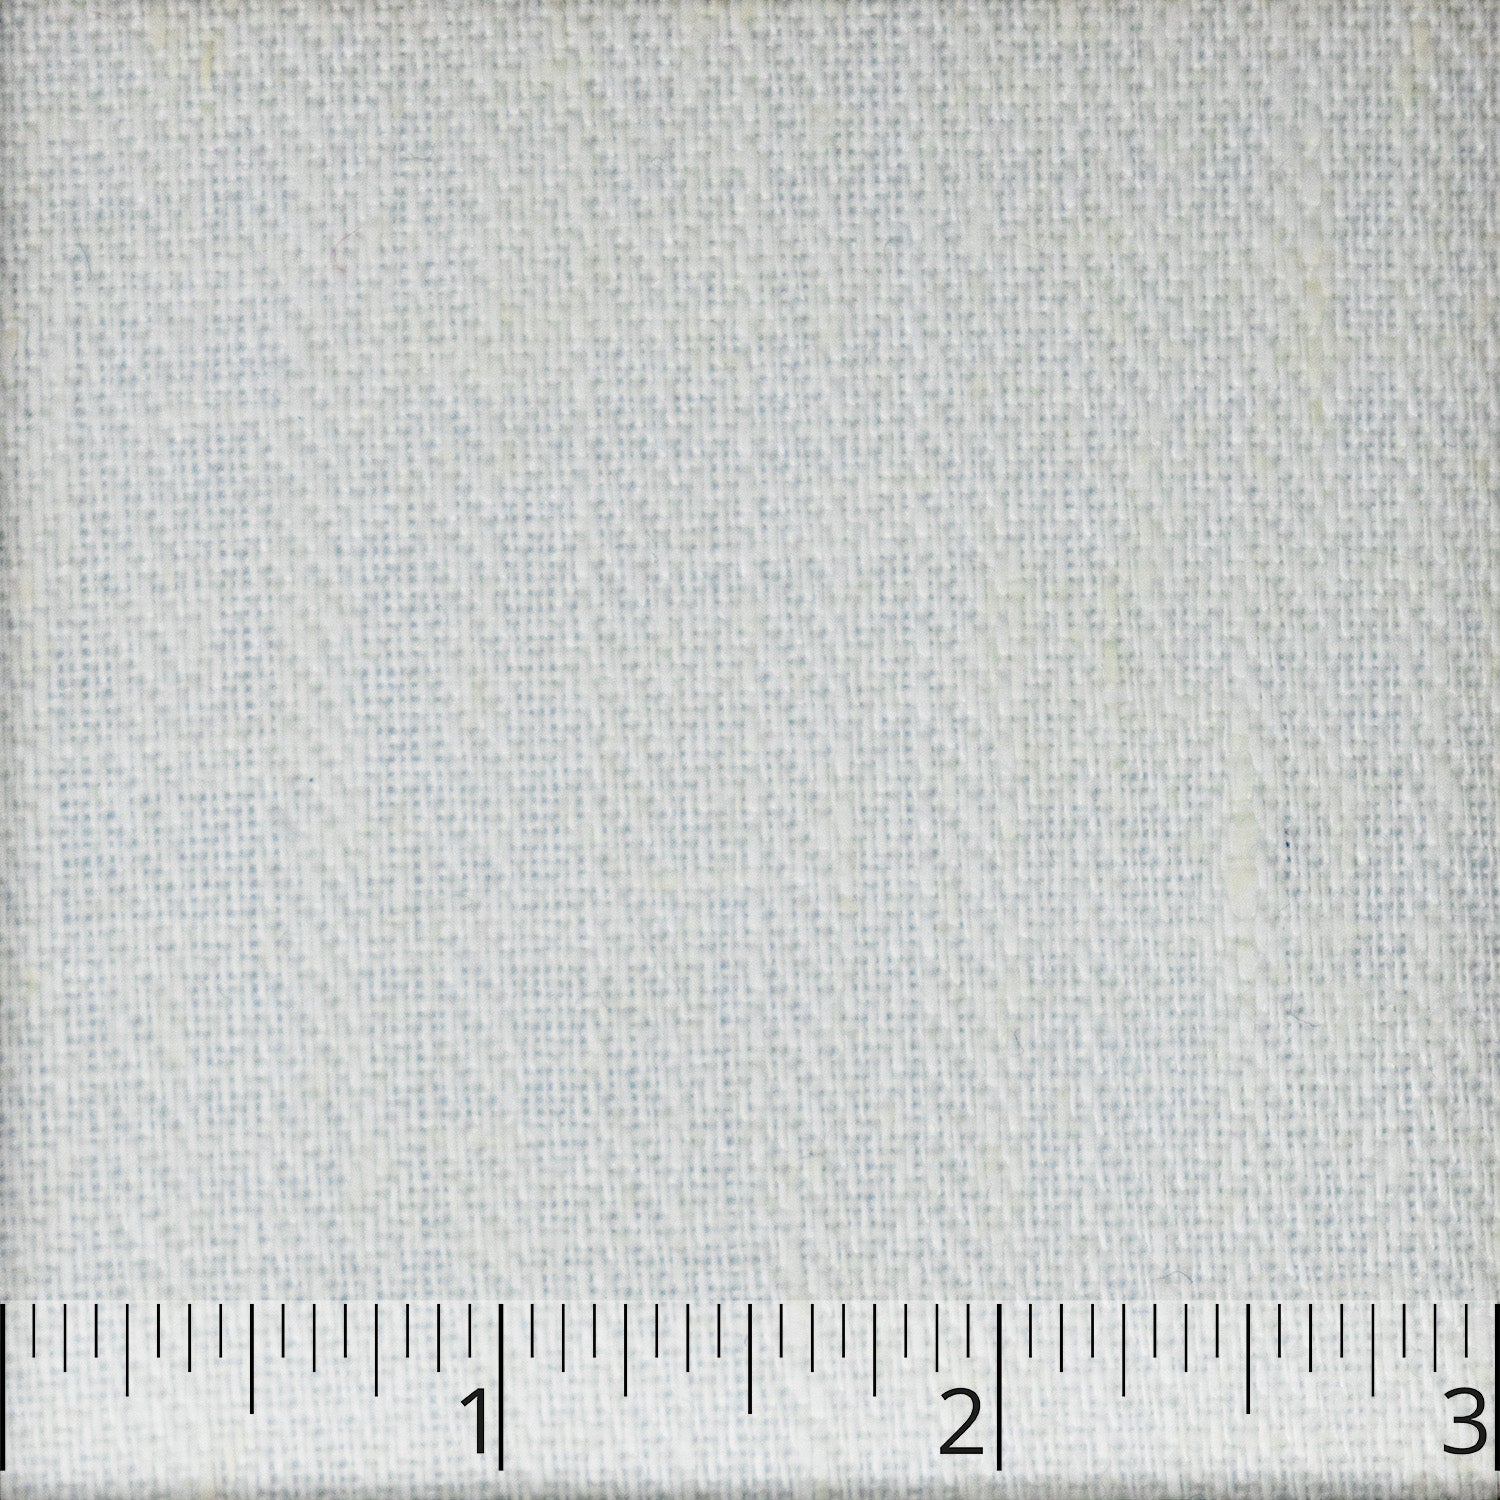 White Herringbone Linen - $14.00 yd. - Burnley & Trowbridge Co.